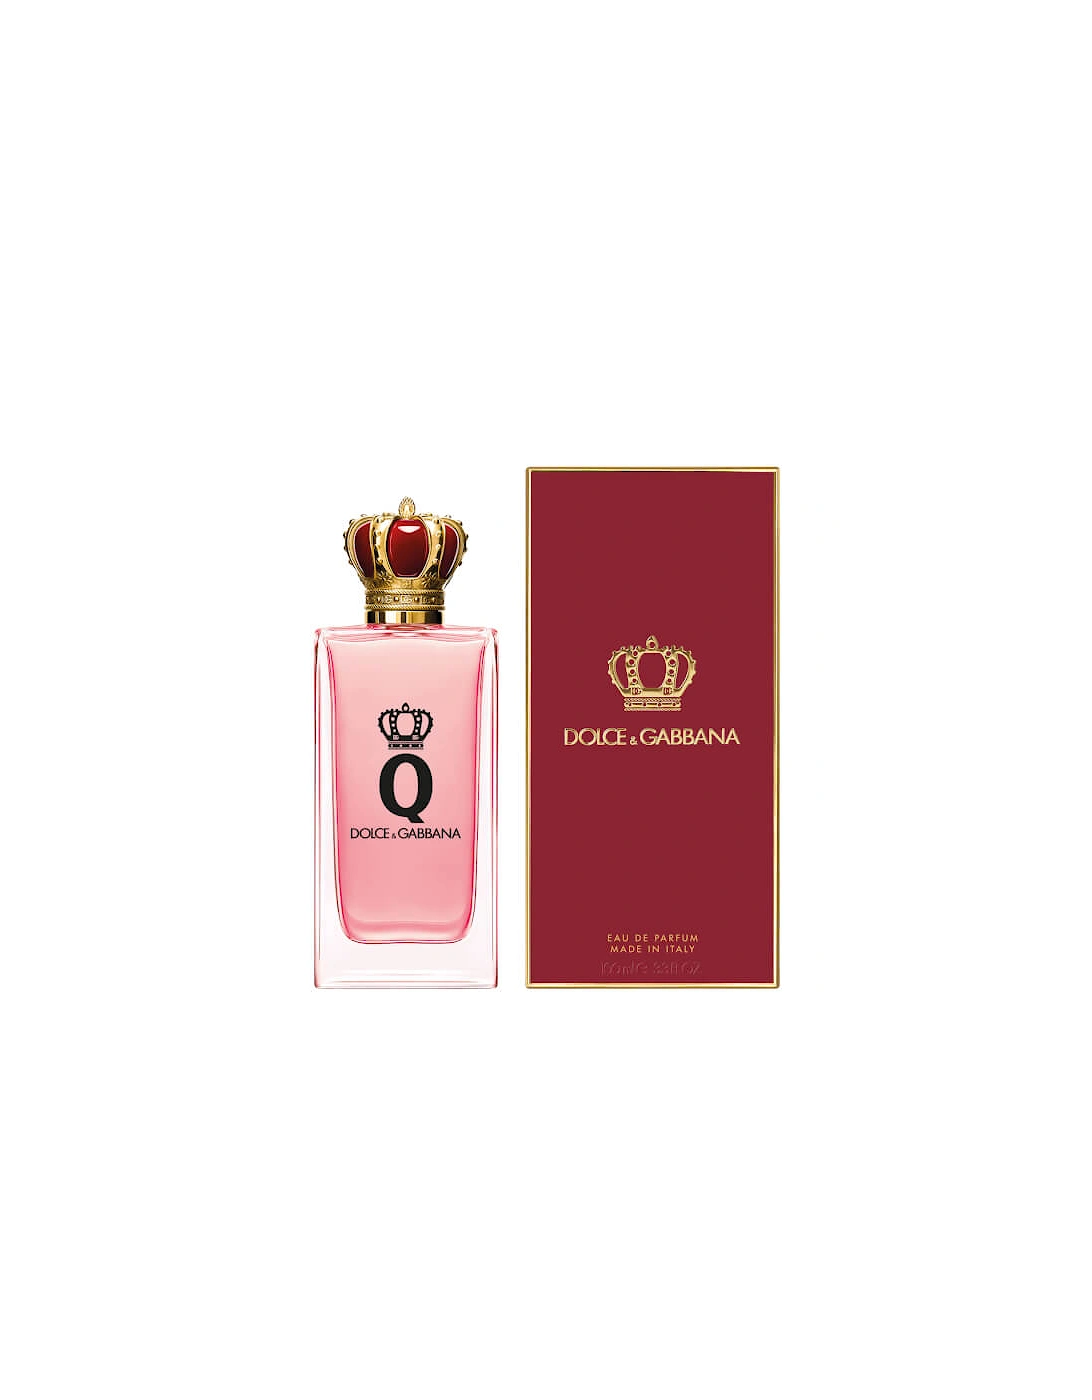 Dolce&Gabbana Q Eau de Parfum 100ml, 2 of 1